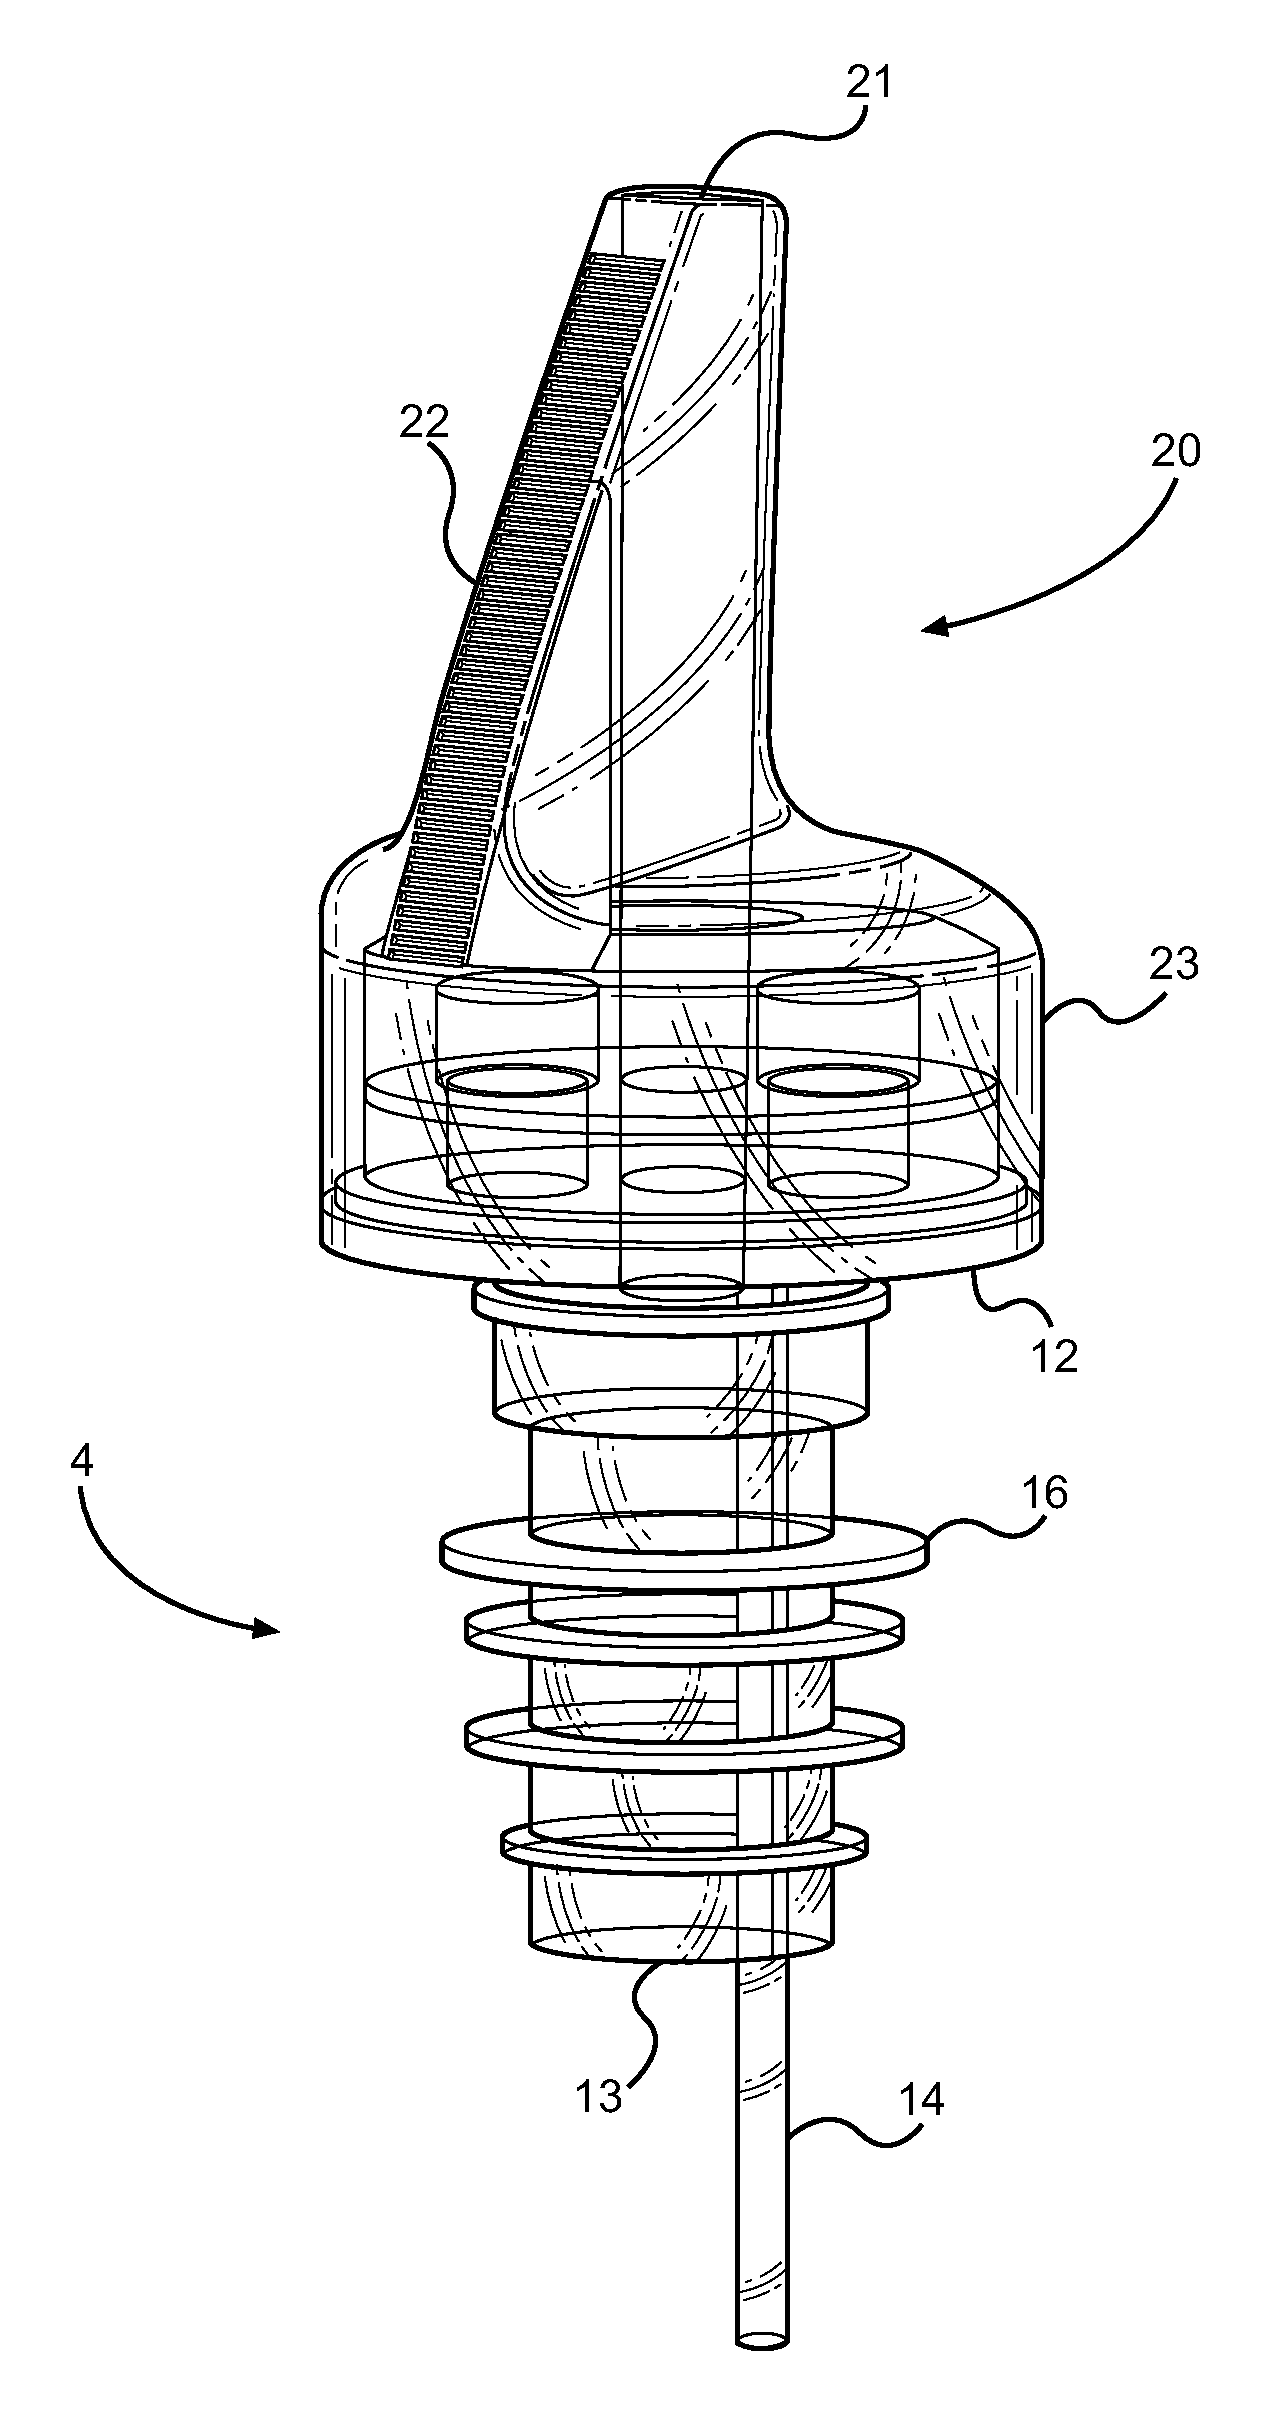 Liquid vessel pourer with timed illuminator for measuring purposes